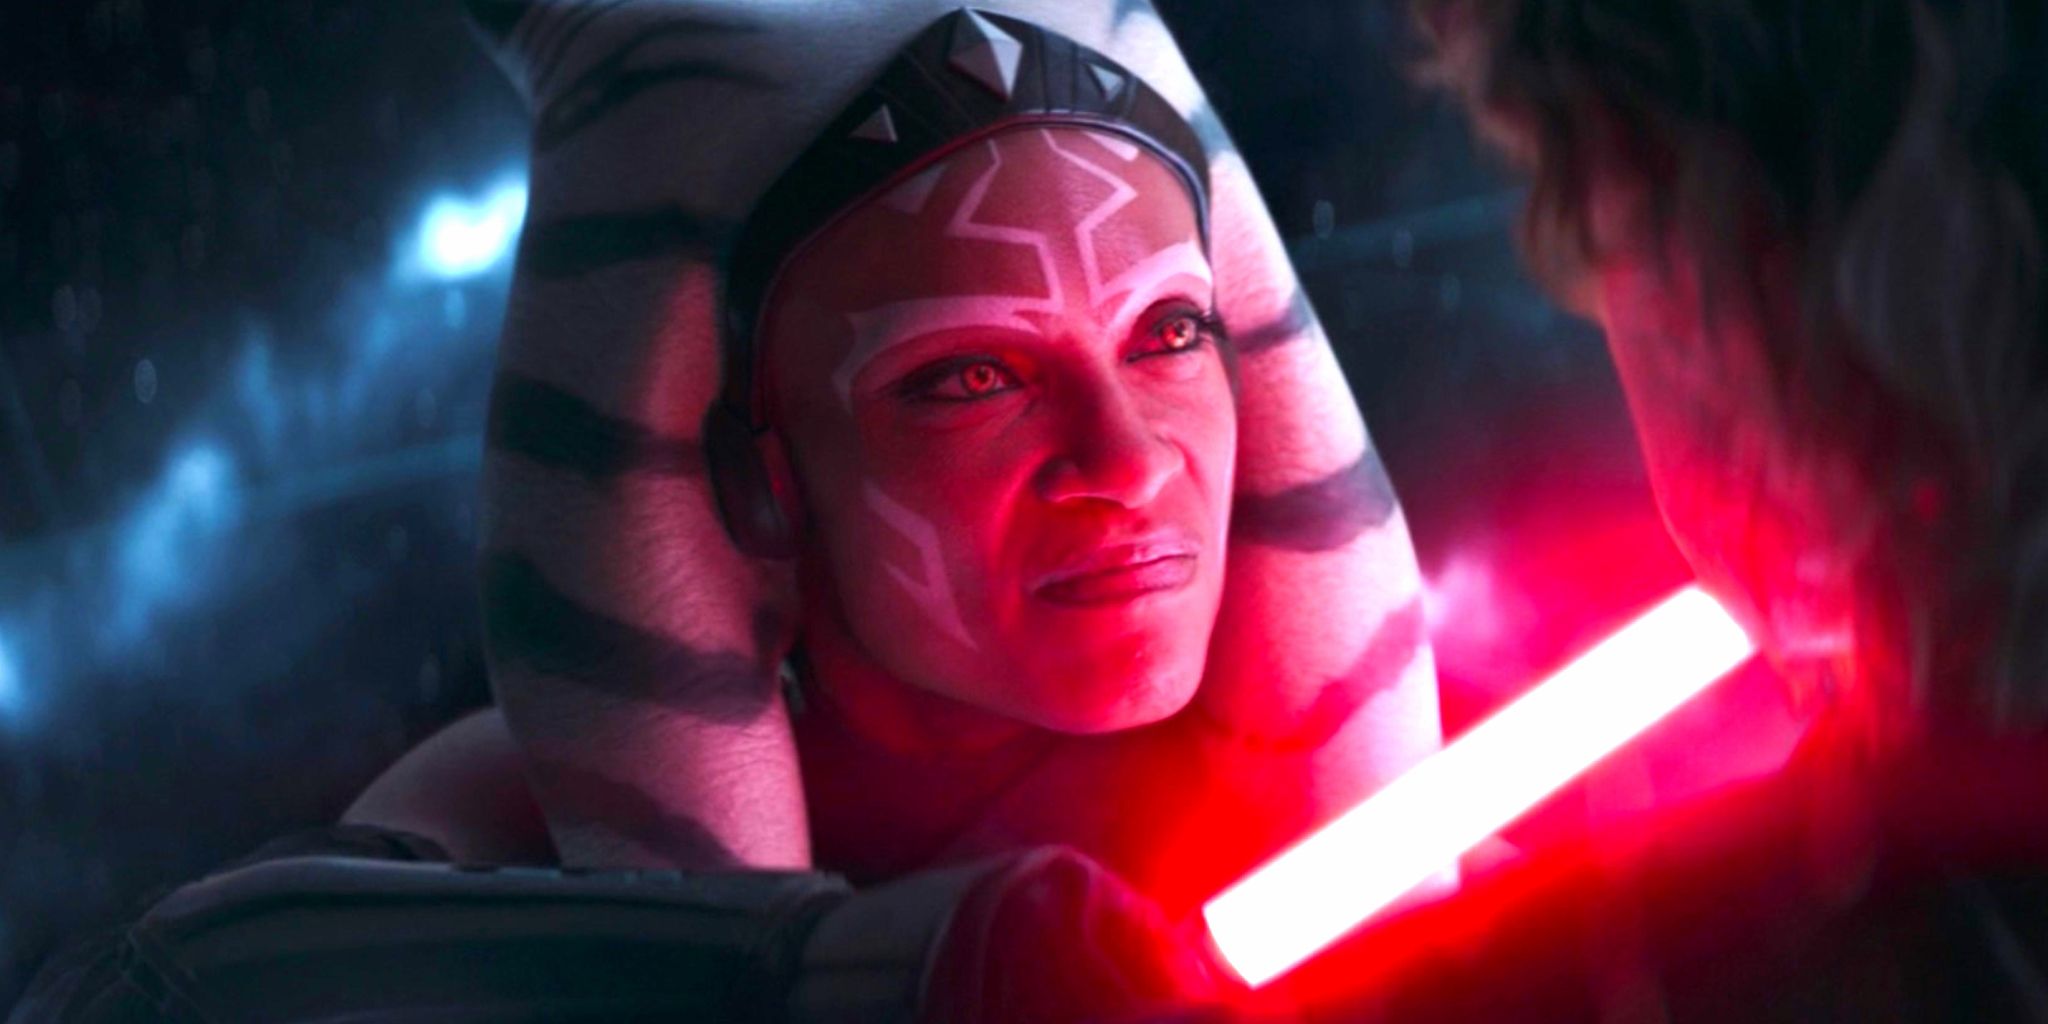 Ahsoka reflects Sith eyes when facing Anakin in Ahsoka episode 5.